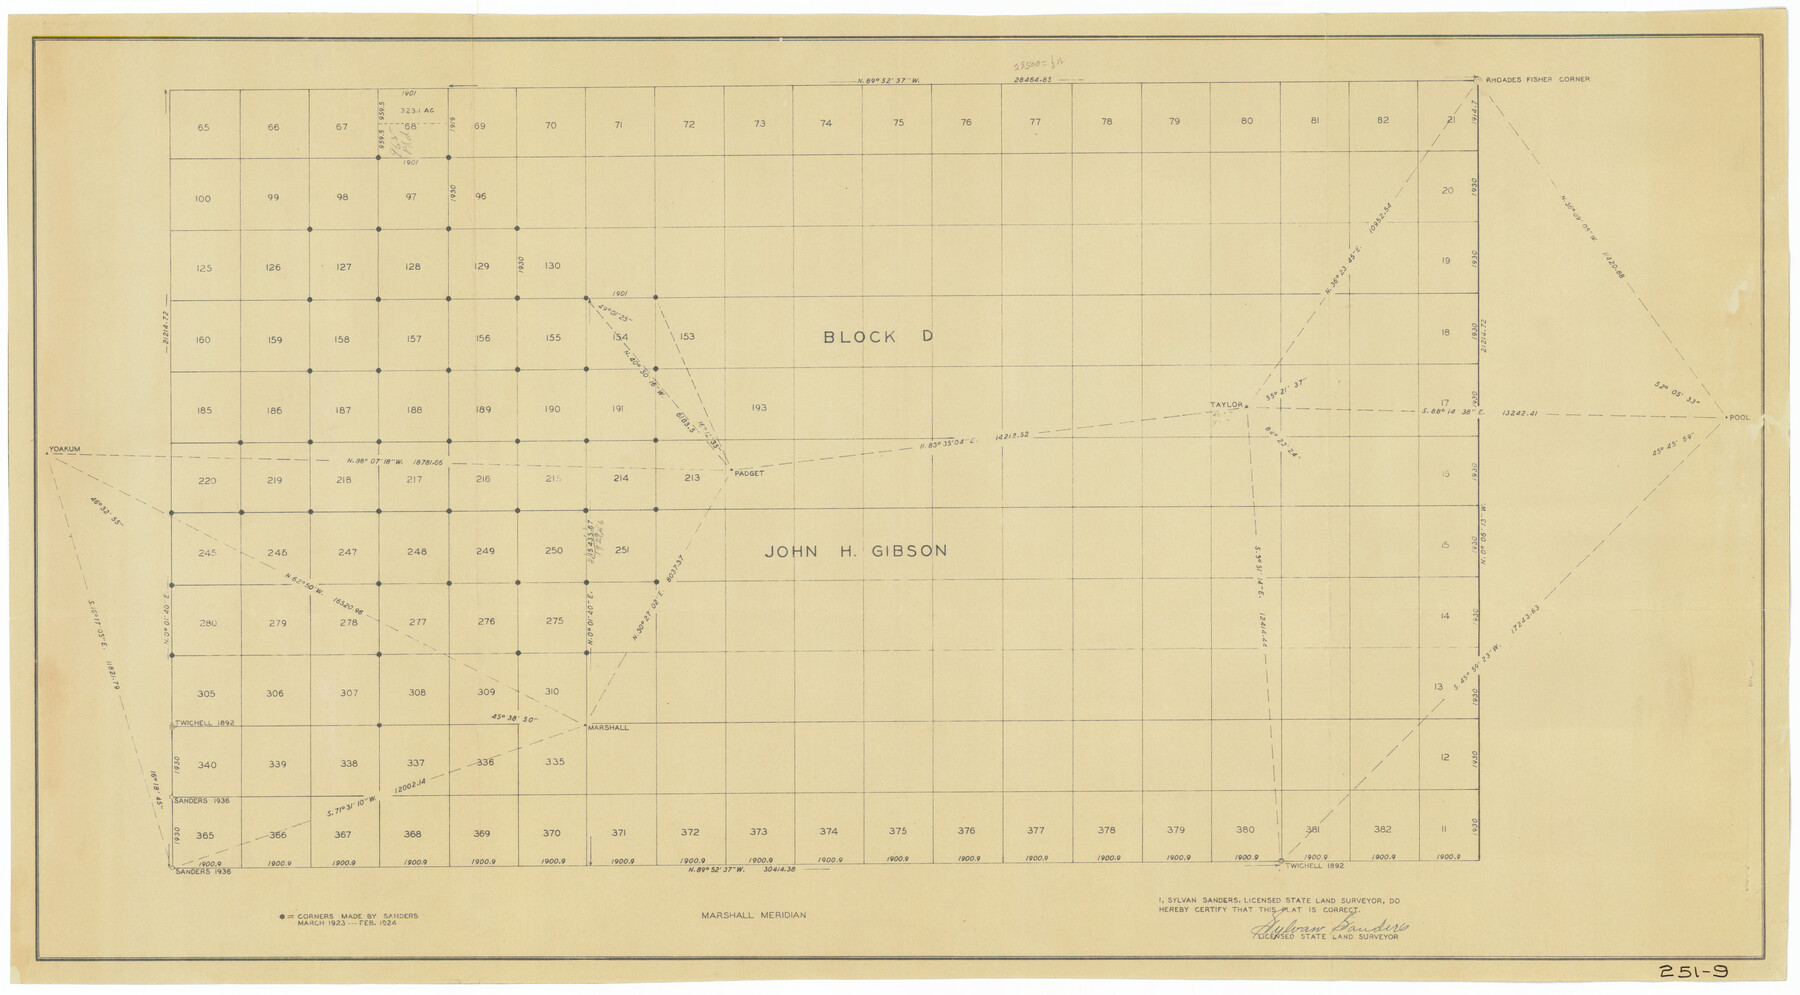 92003, [Block D, John H. Gibson], Twichell Survey Records